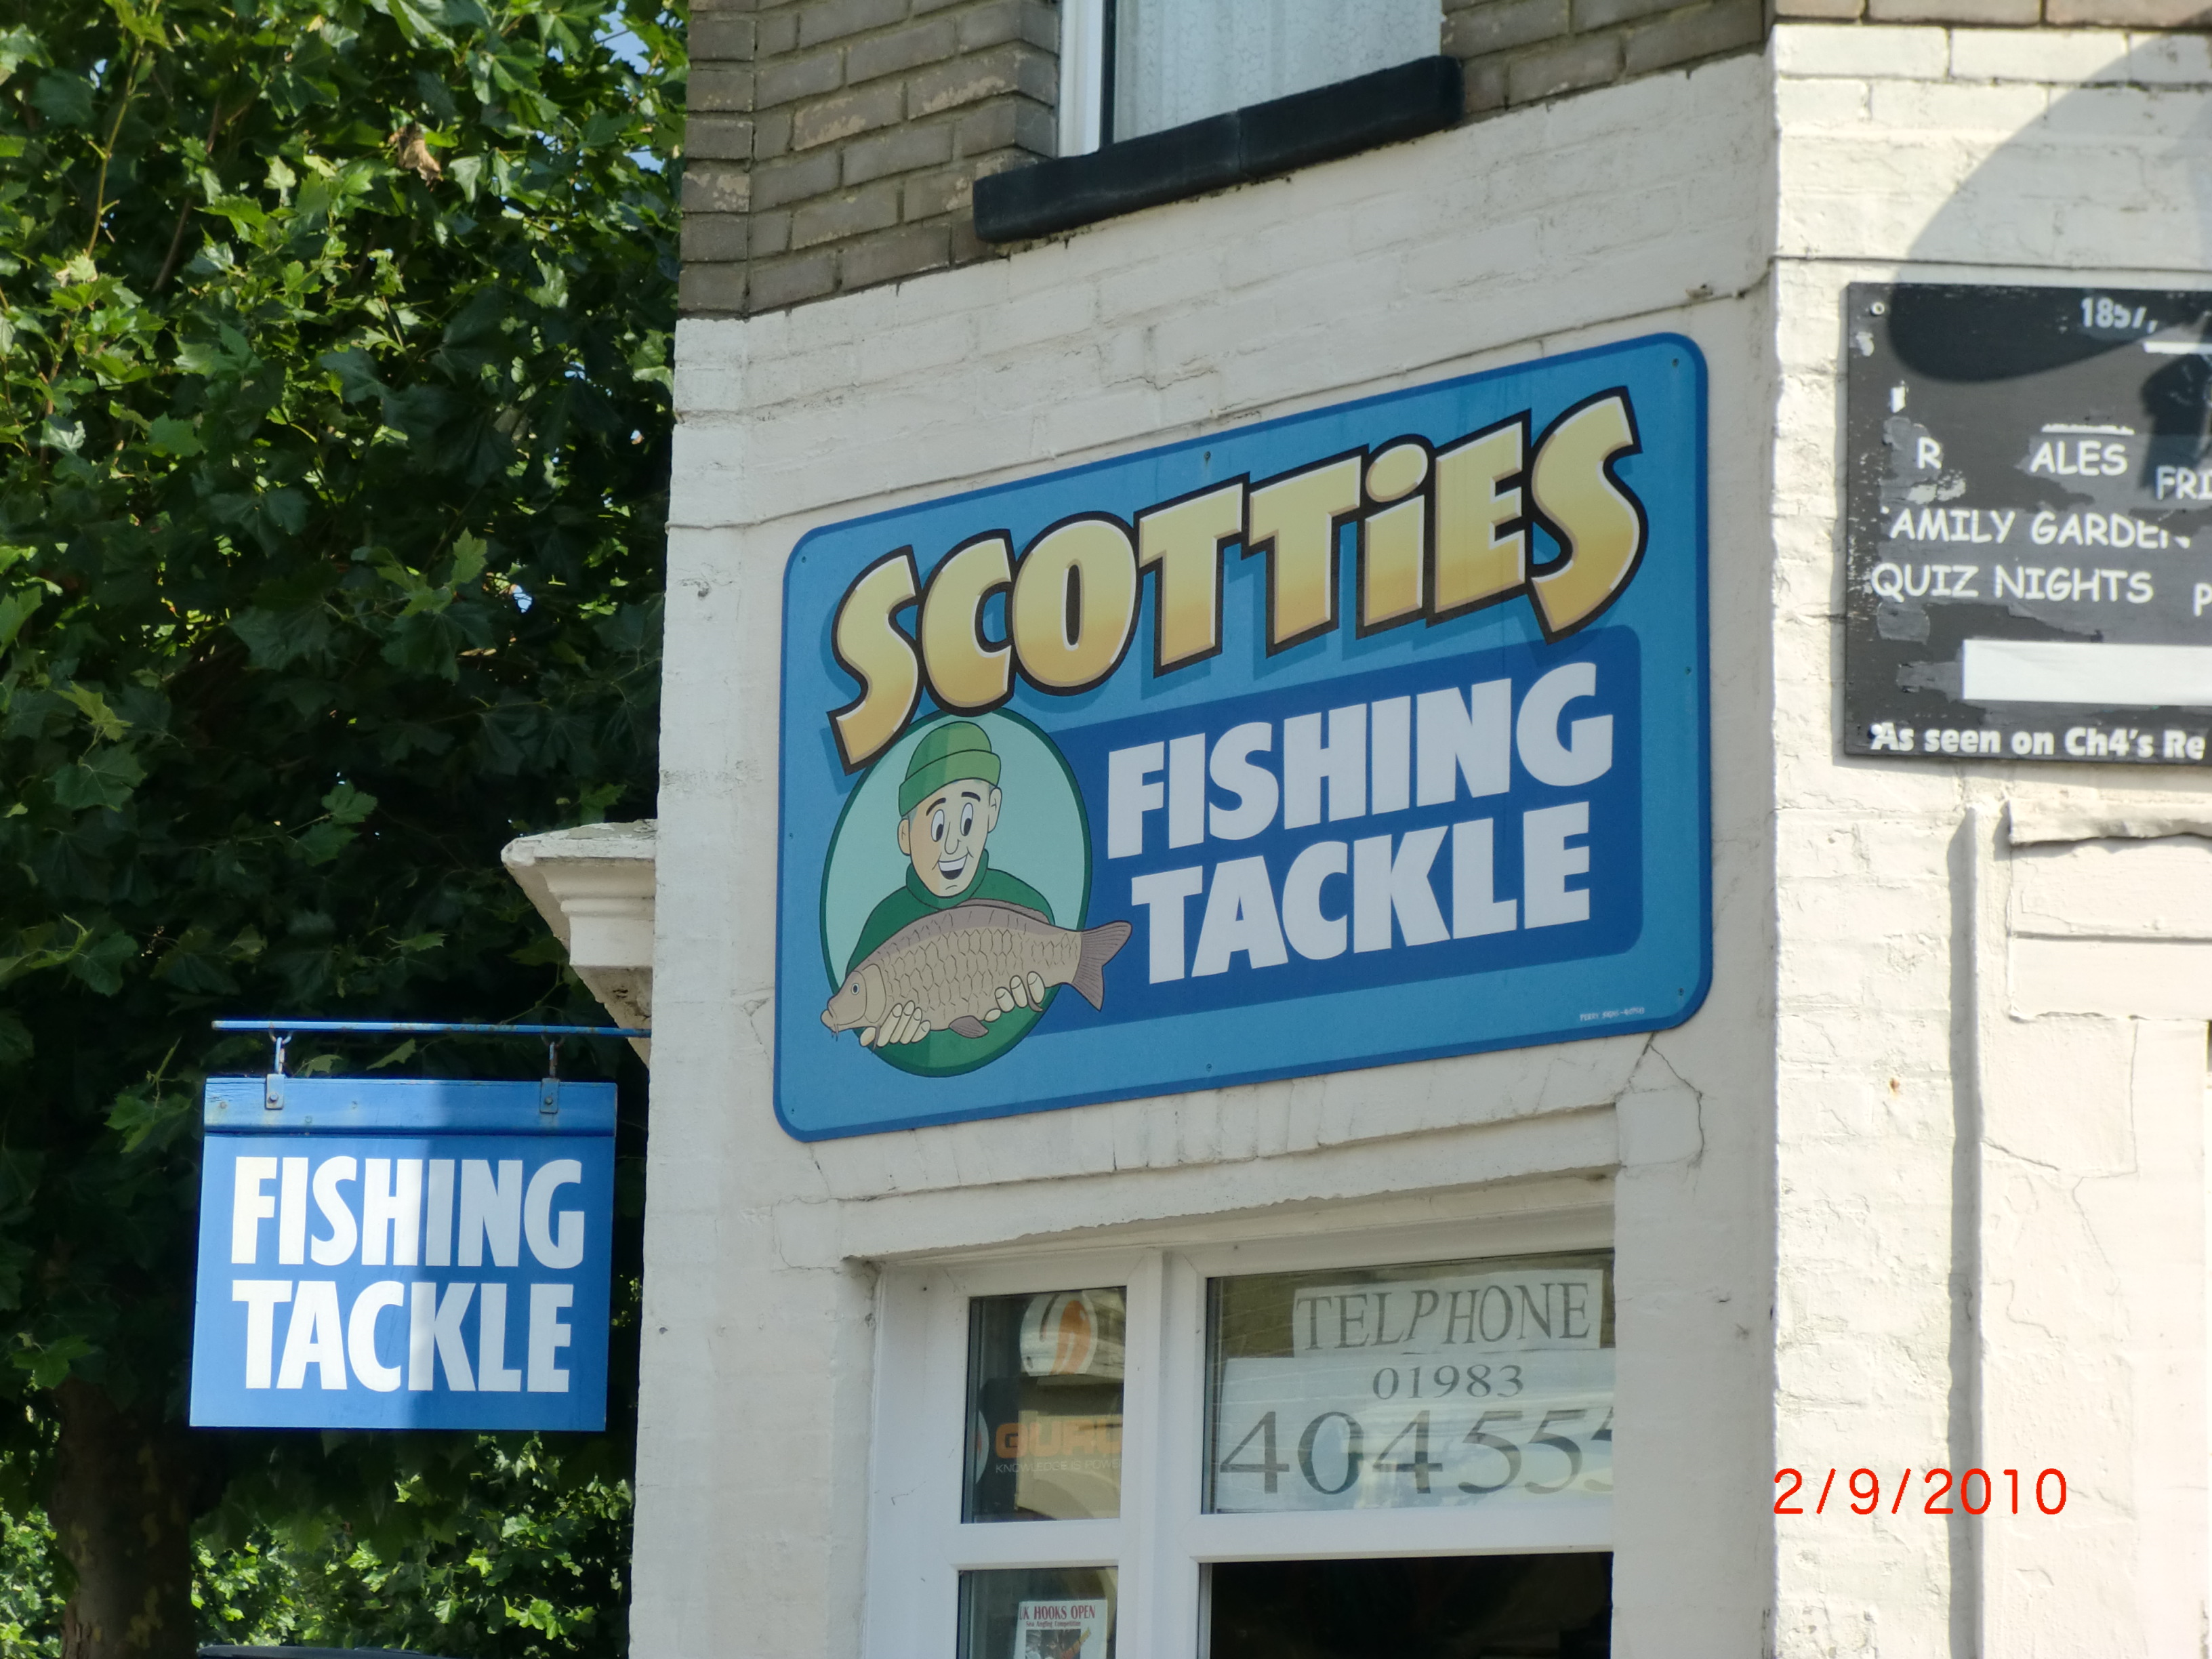 Scotties Fishing Tackle